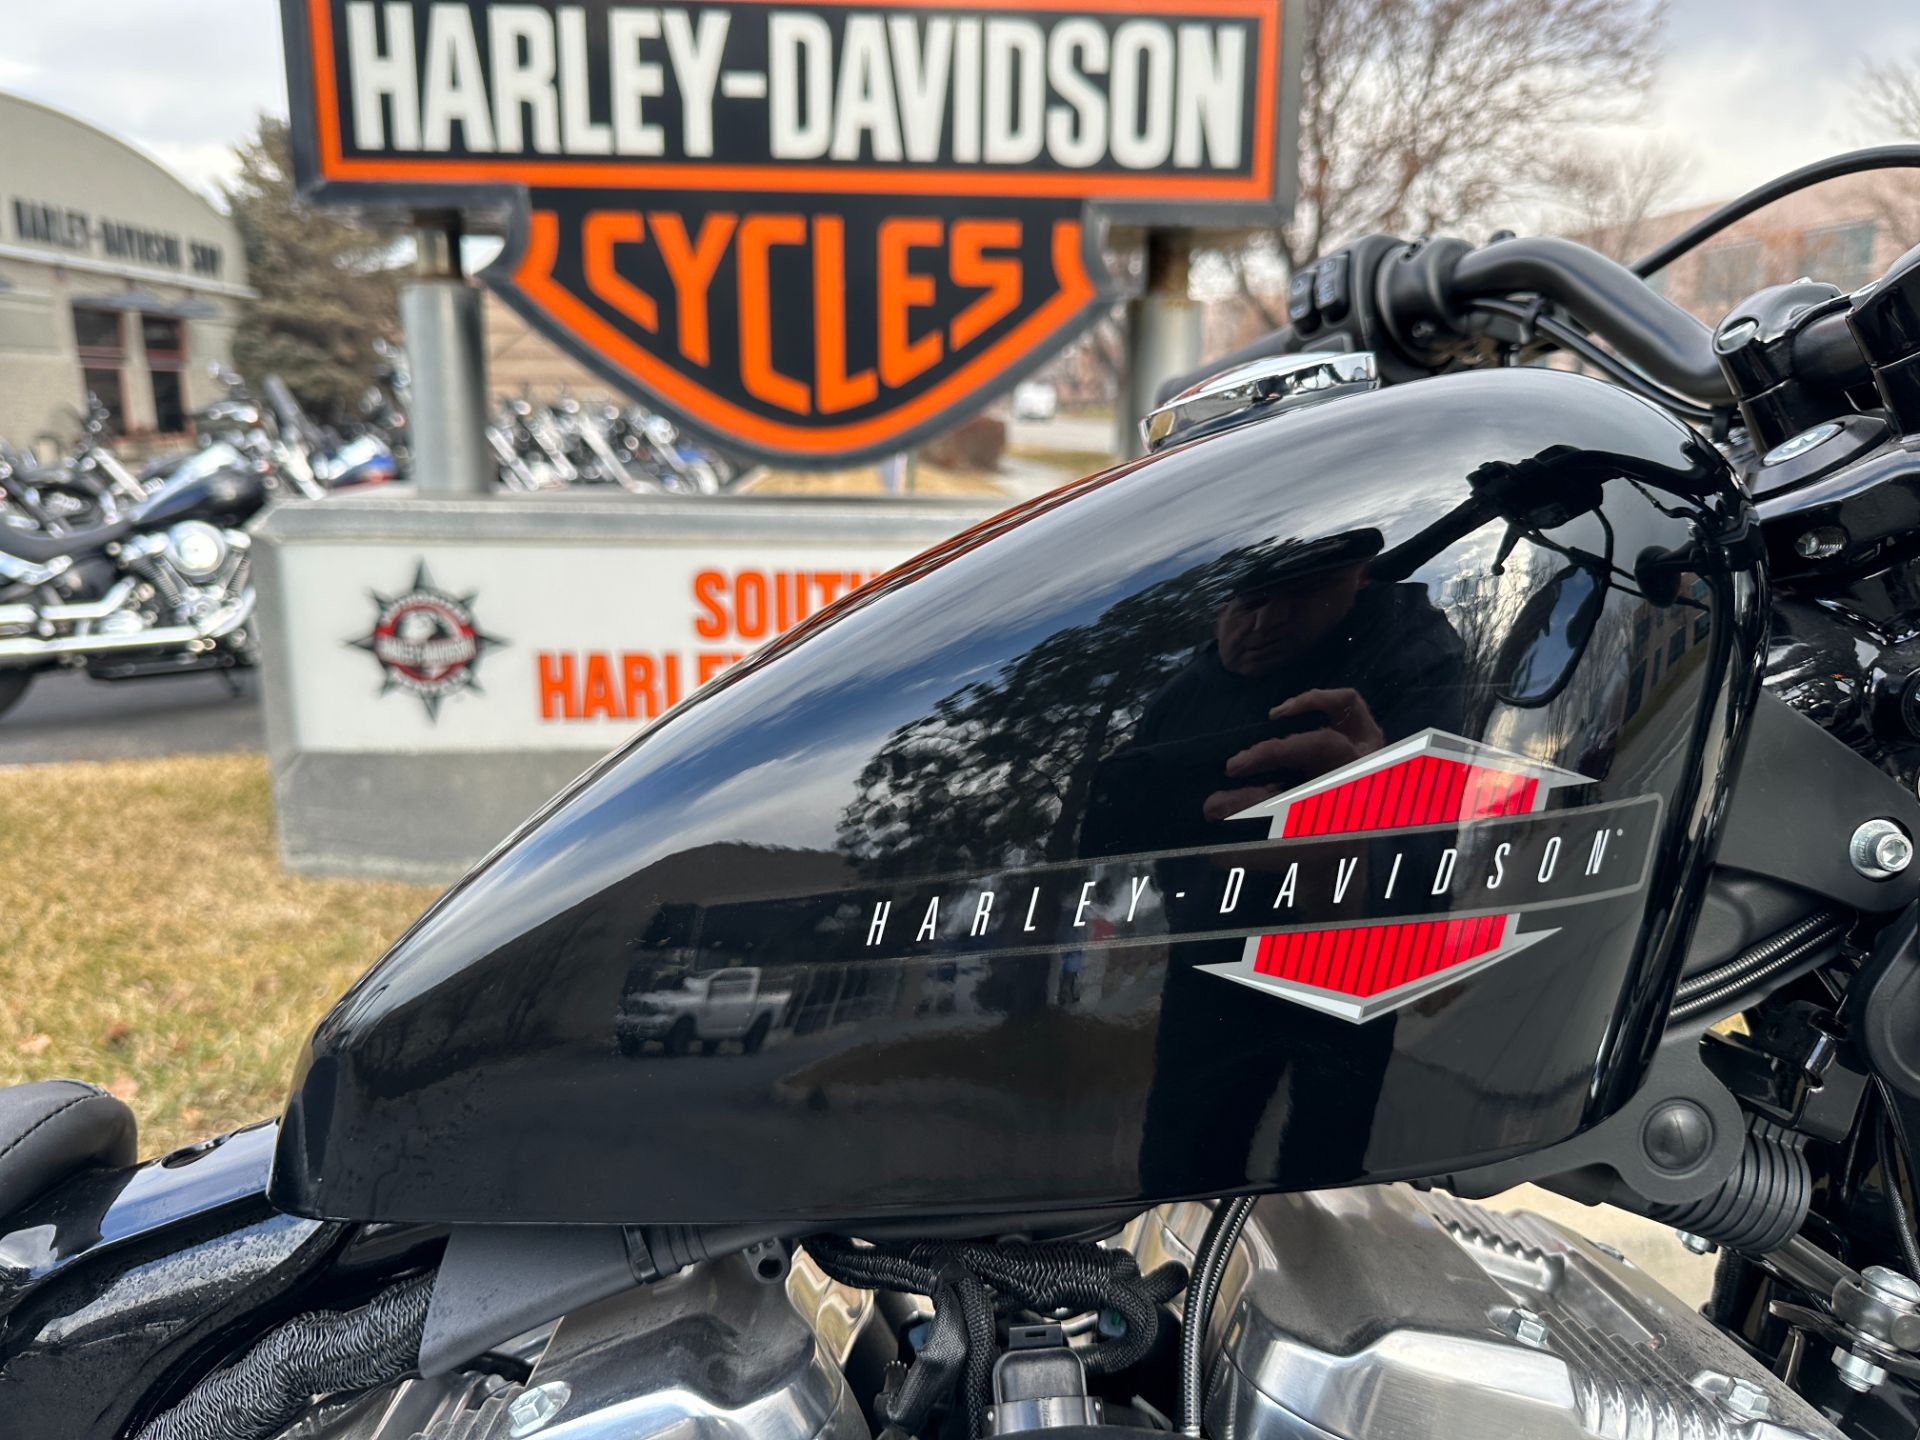 2021 Harley-Davidson Forty-Eight® in Sandy, Utah - Photo 3